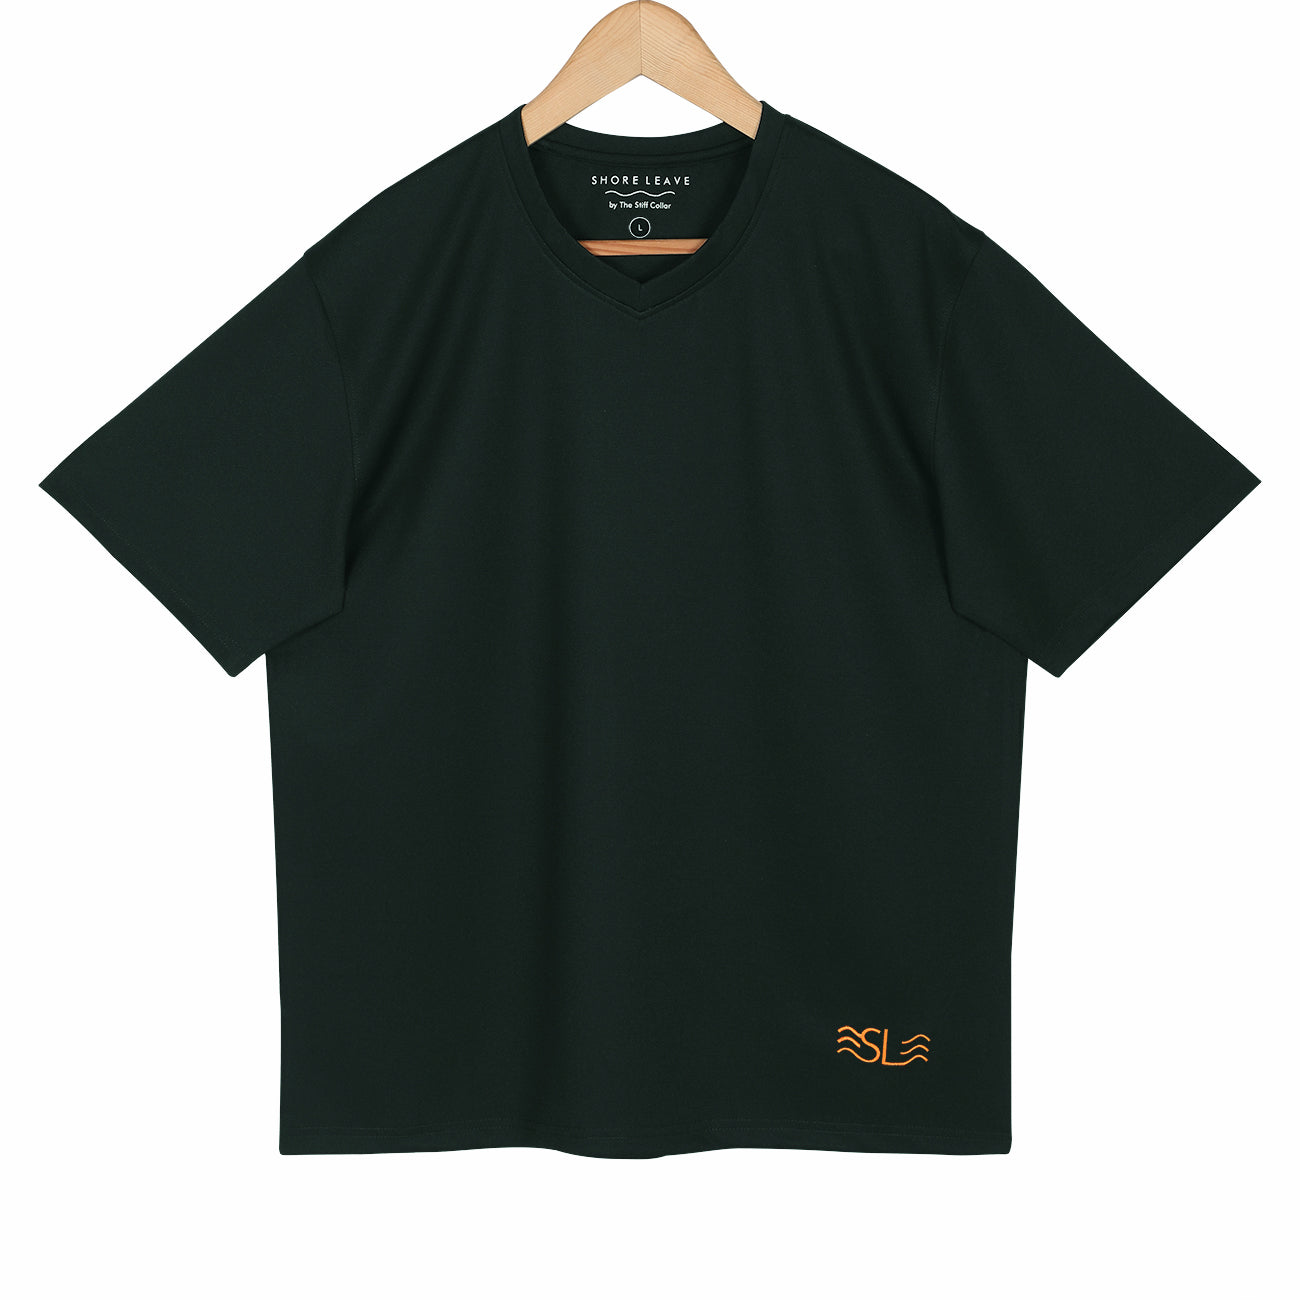 Olive Green Premium Imported V Neck T-shirt